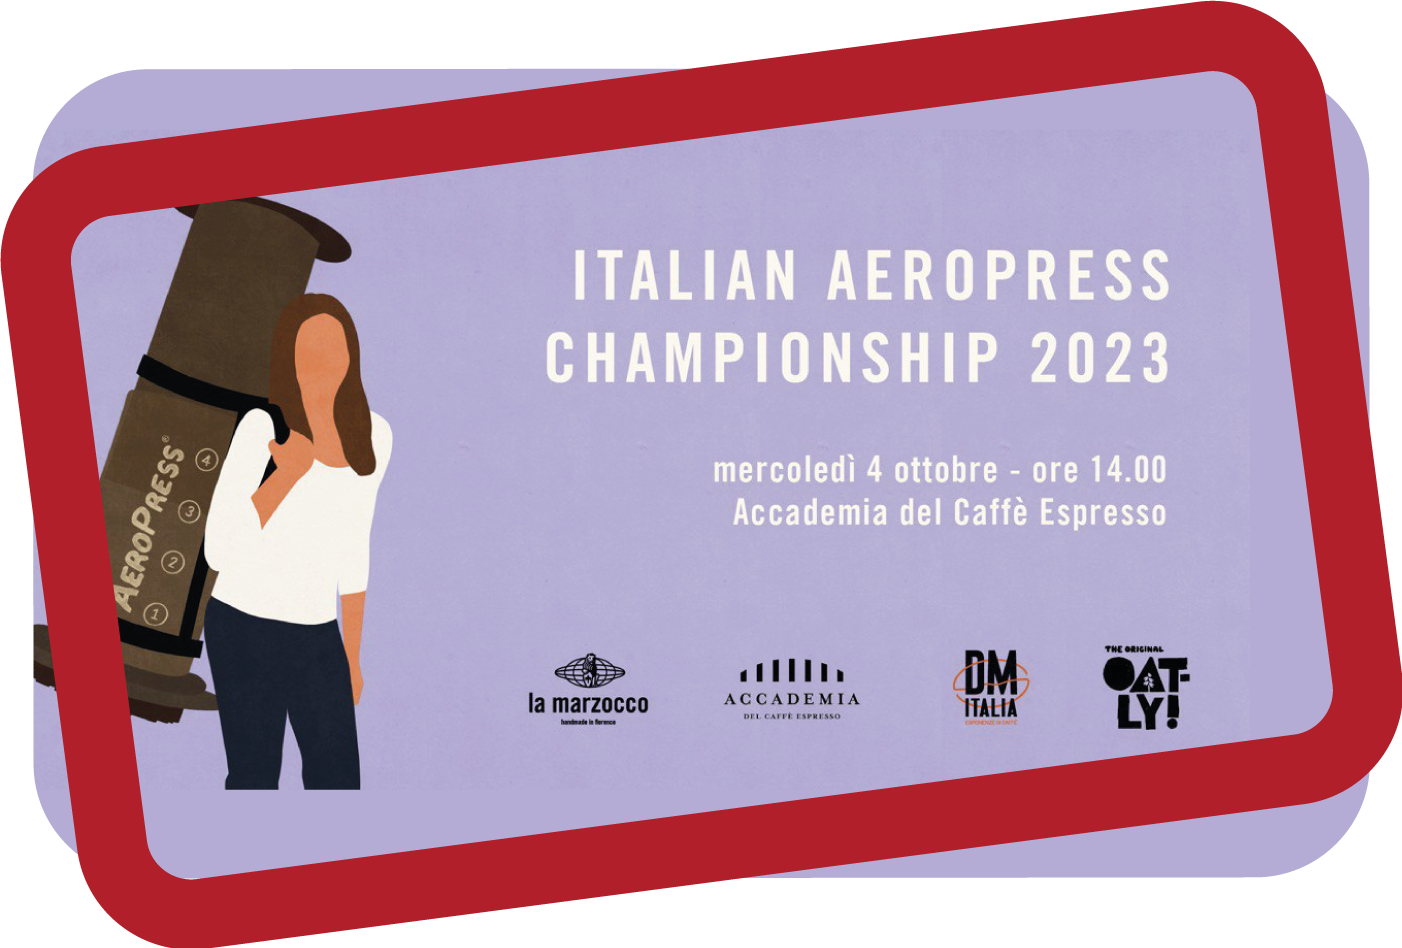 ITALIAN AEROPRESS CHAMPIONSHIP 2023